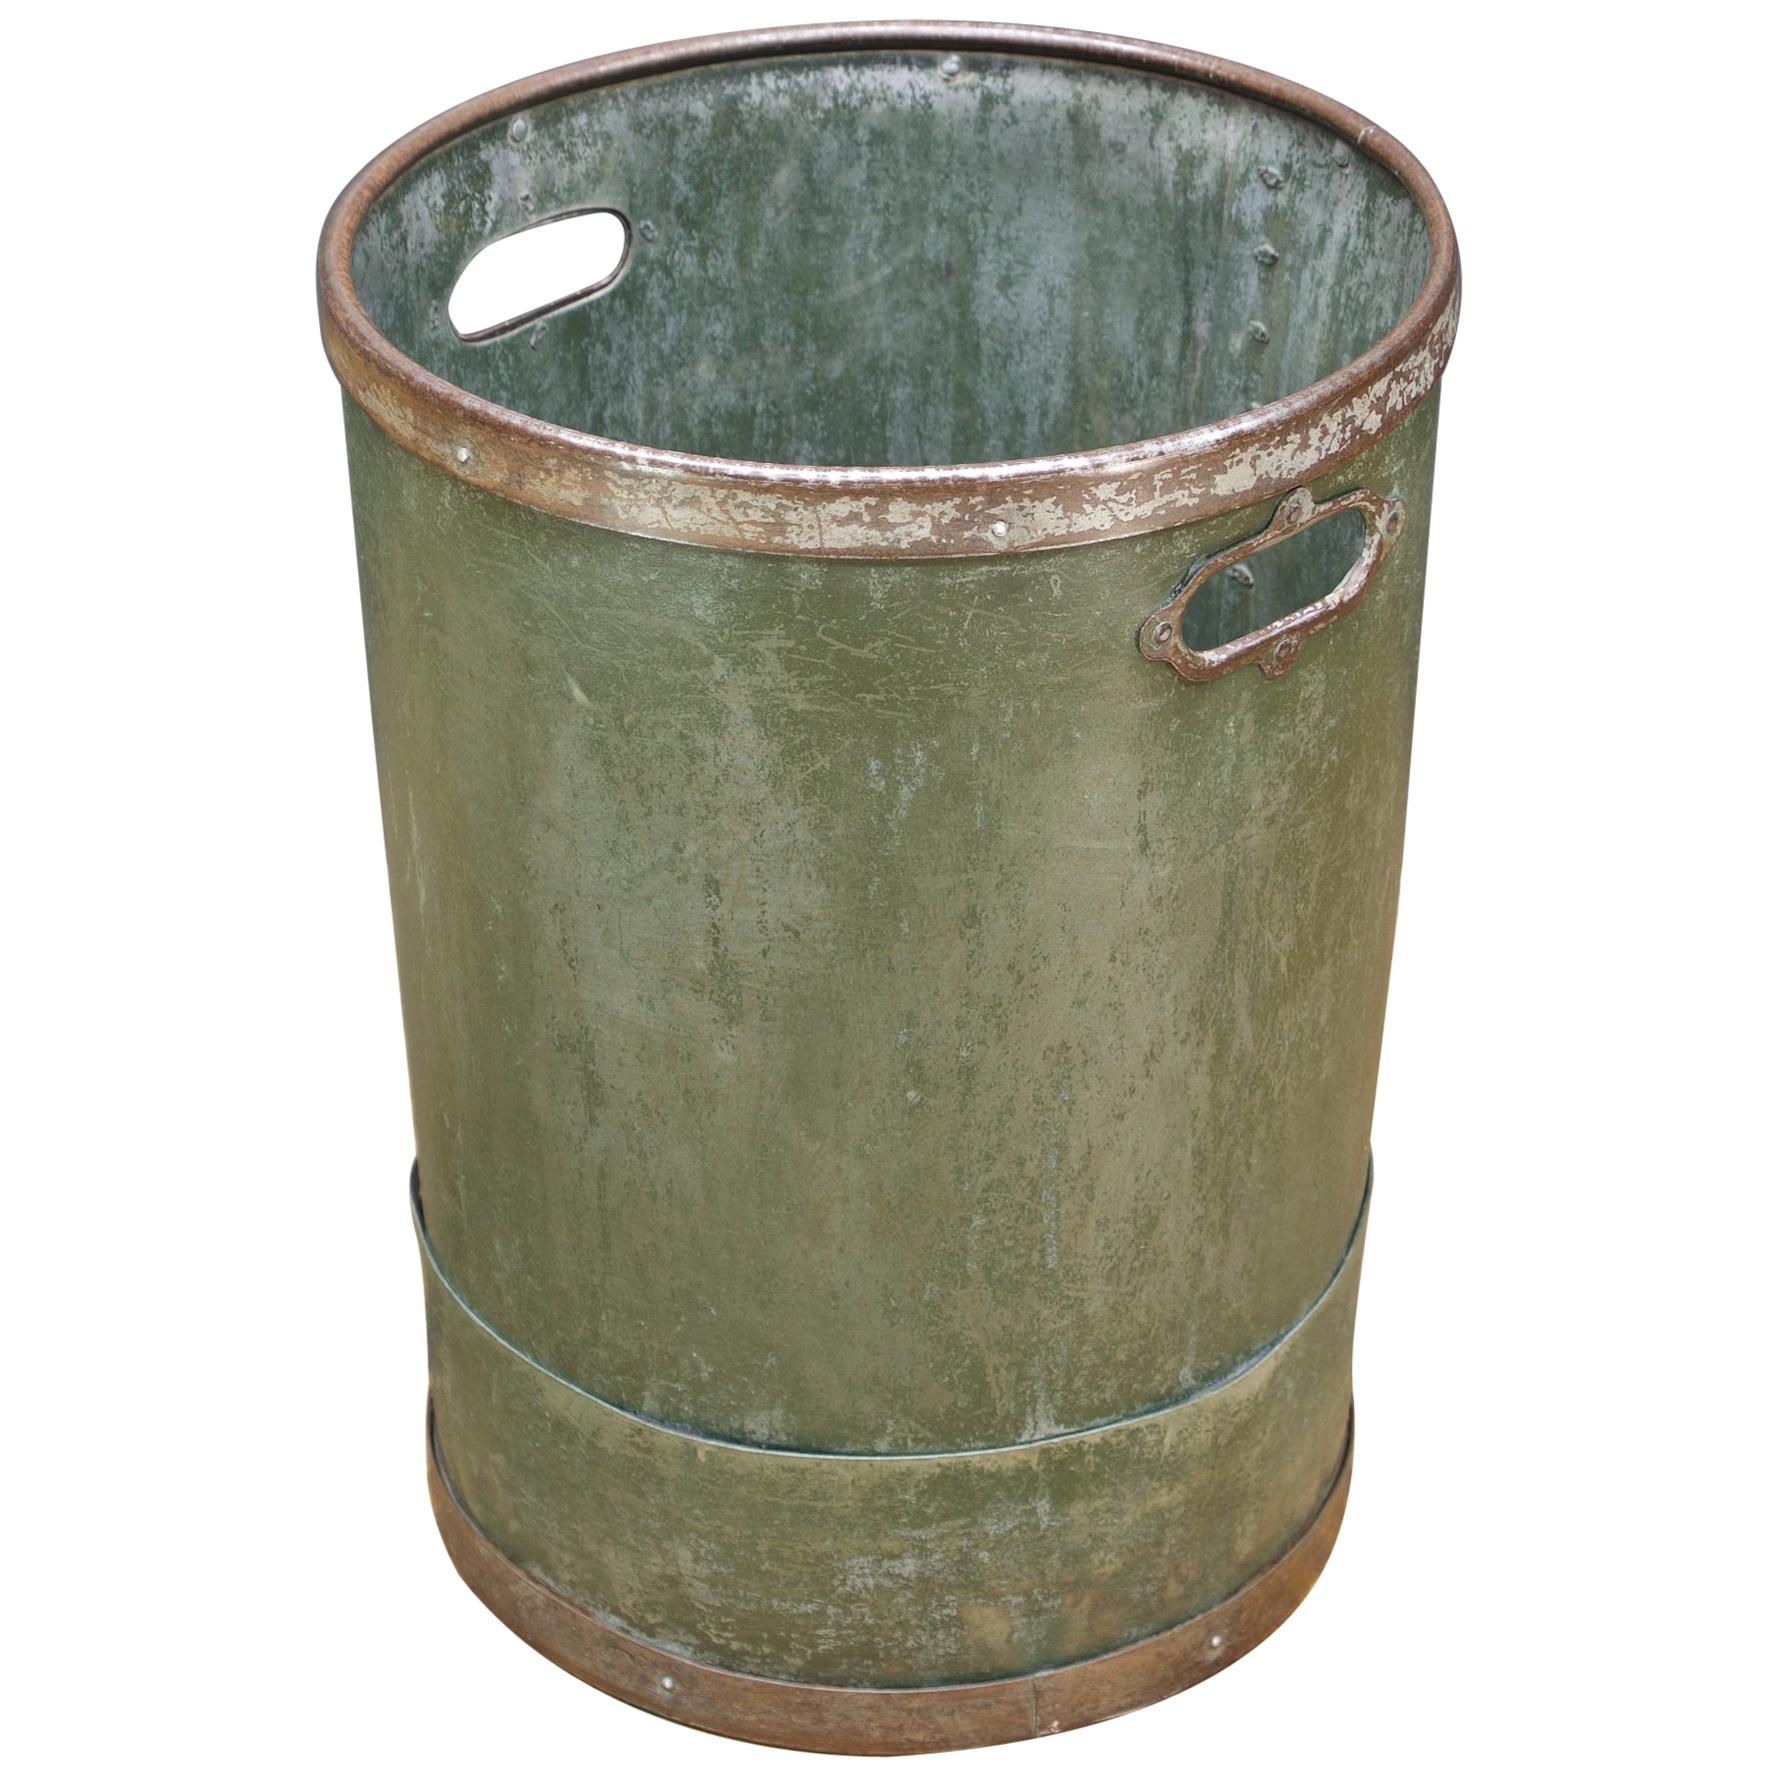 1940s Industrial Vulcanized Fiber Steel Rimmed Handled Wastebasket Bin Trash Can